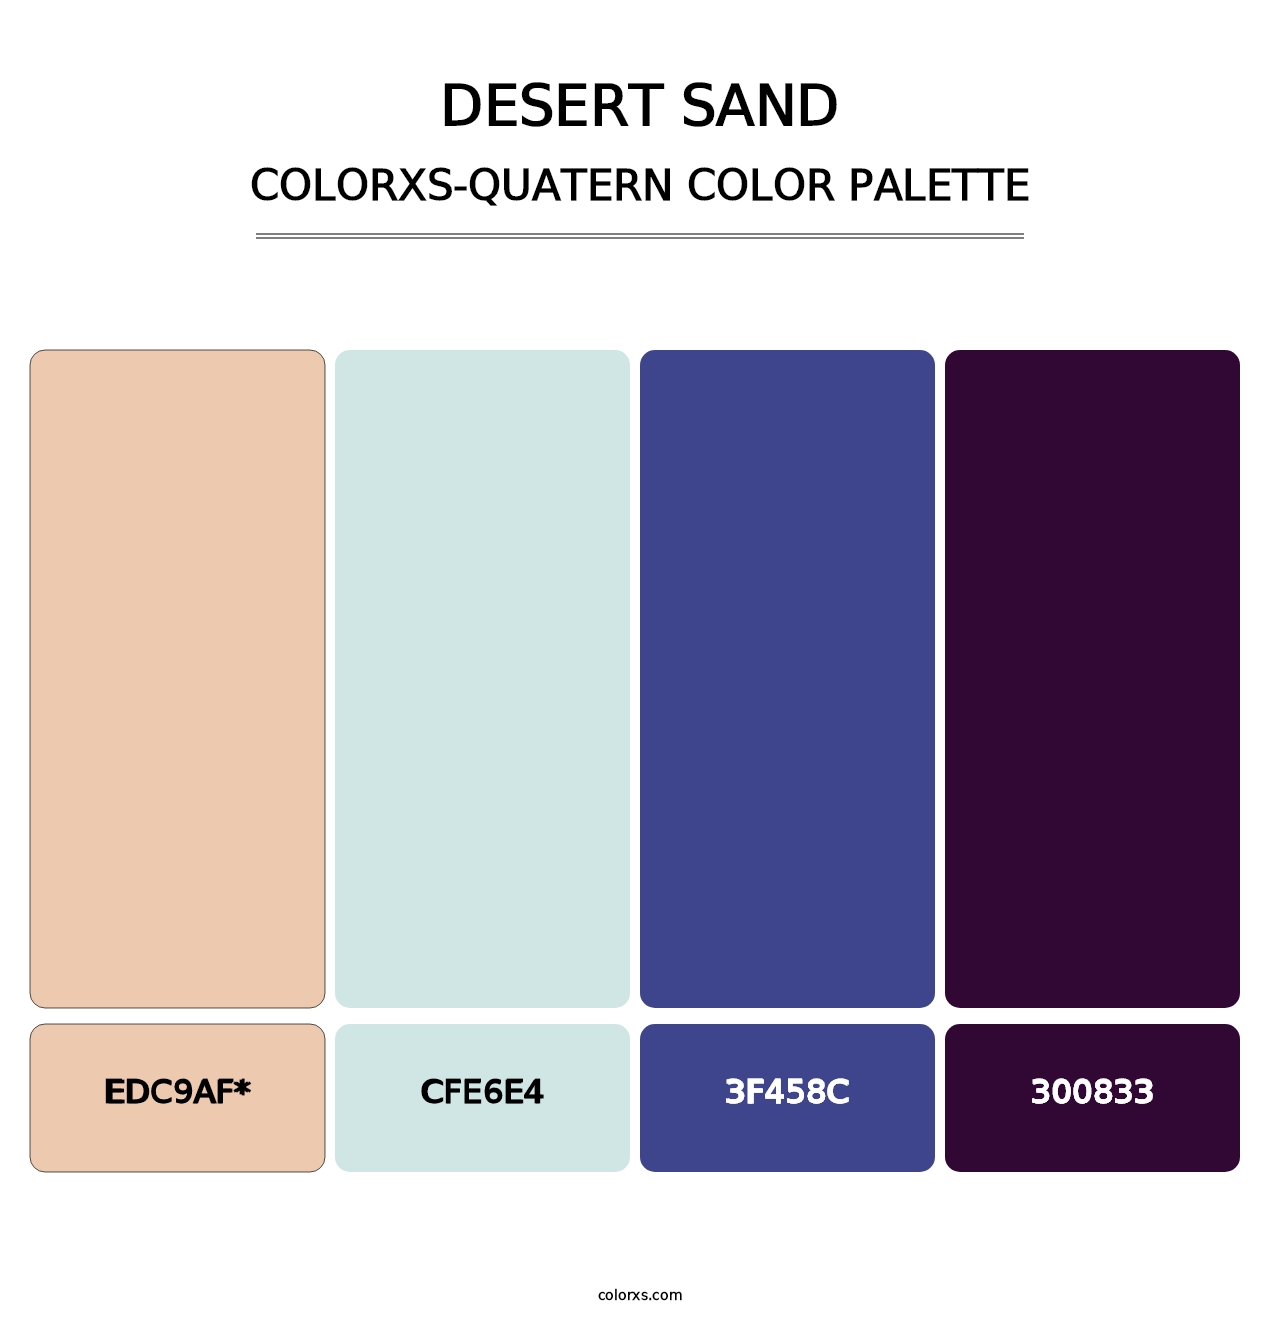 Desert Sand - Colorxs Quatern Palette